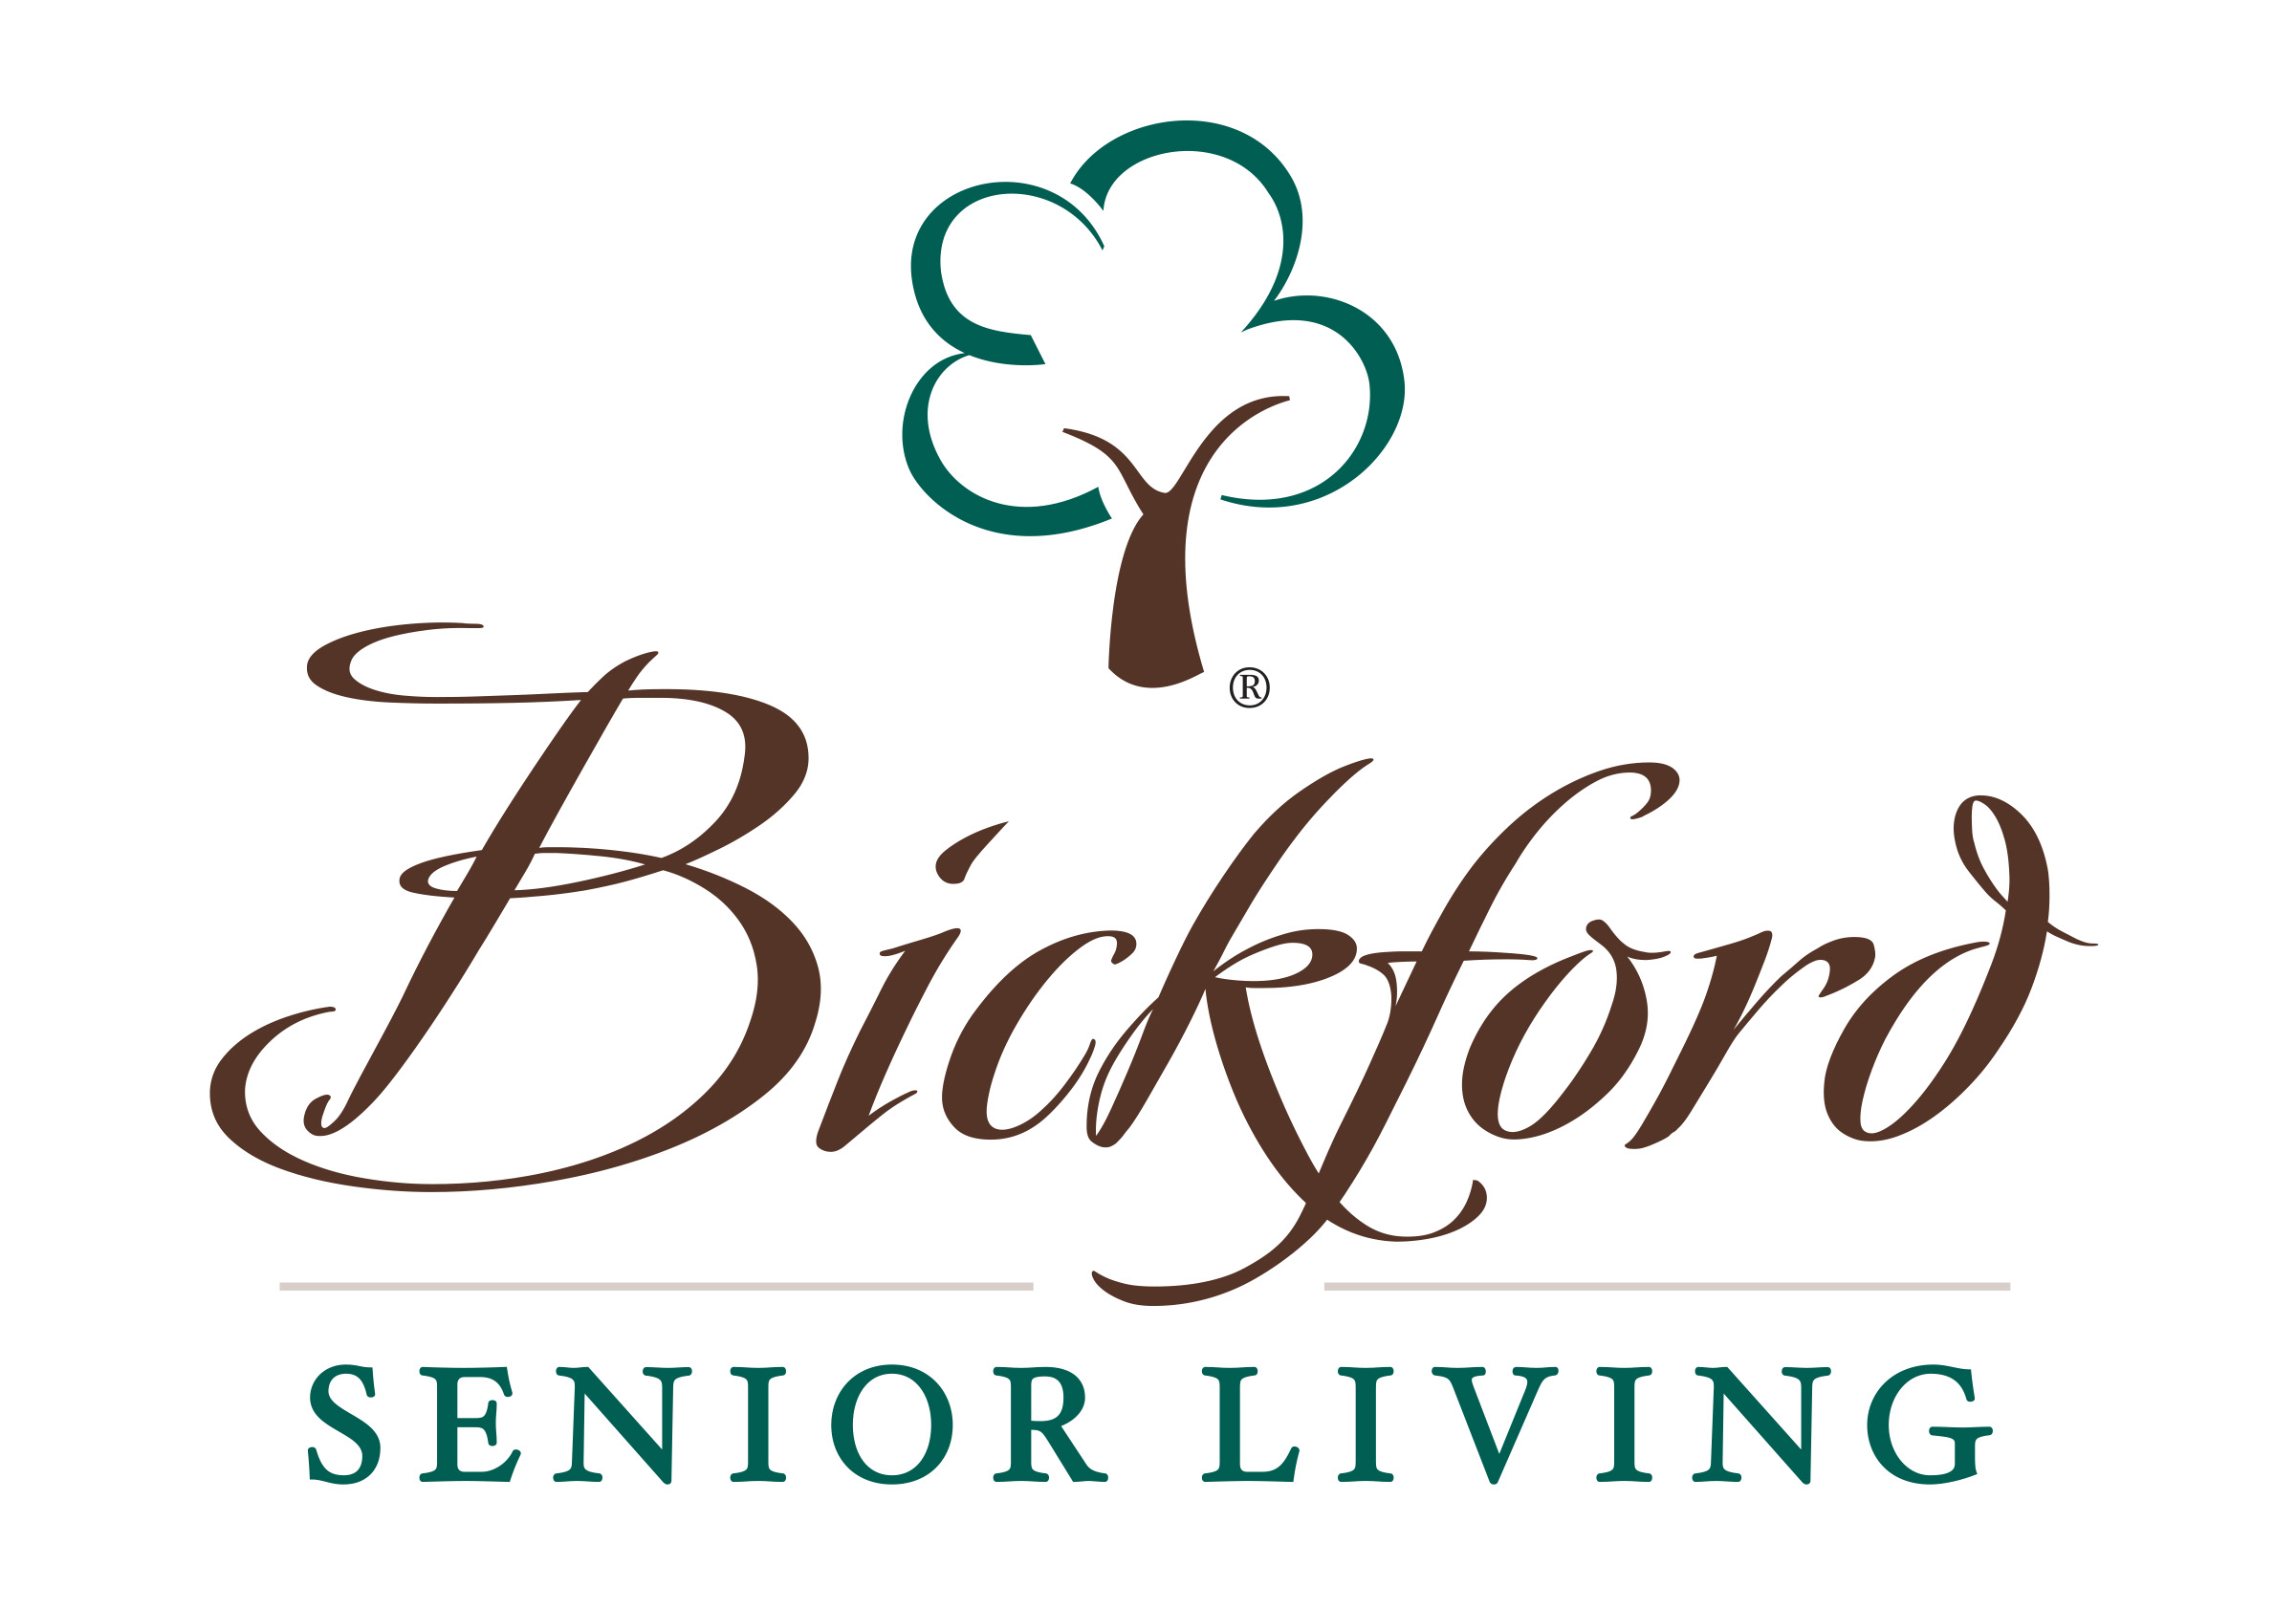 Name Badge of Bickford Senior Living